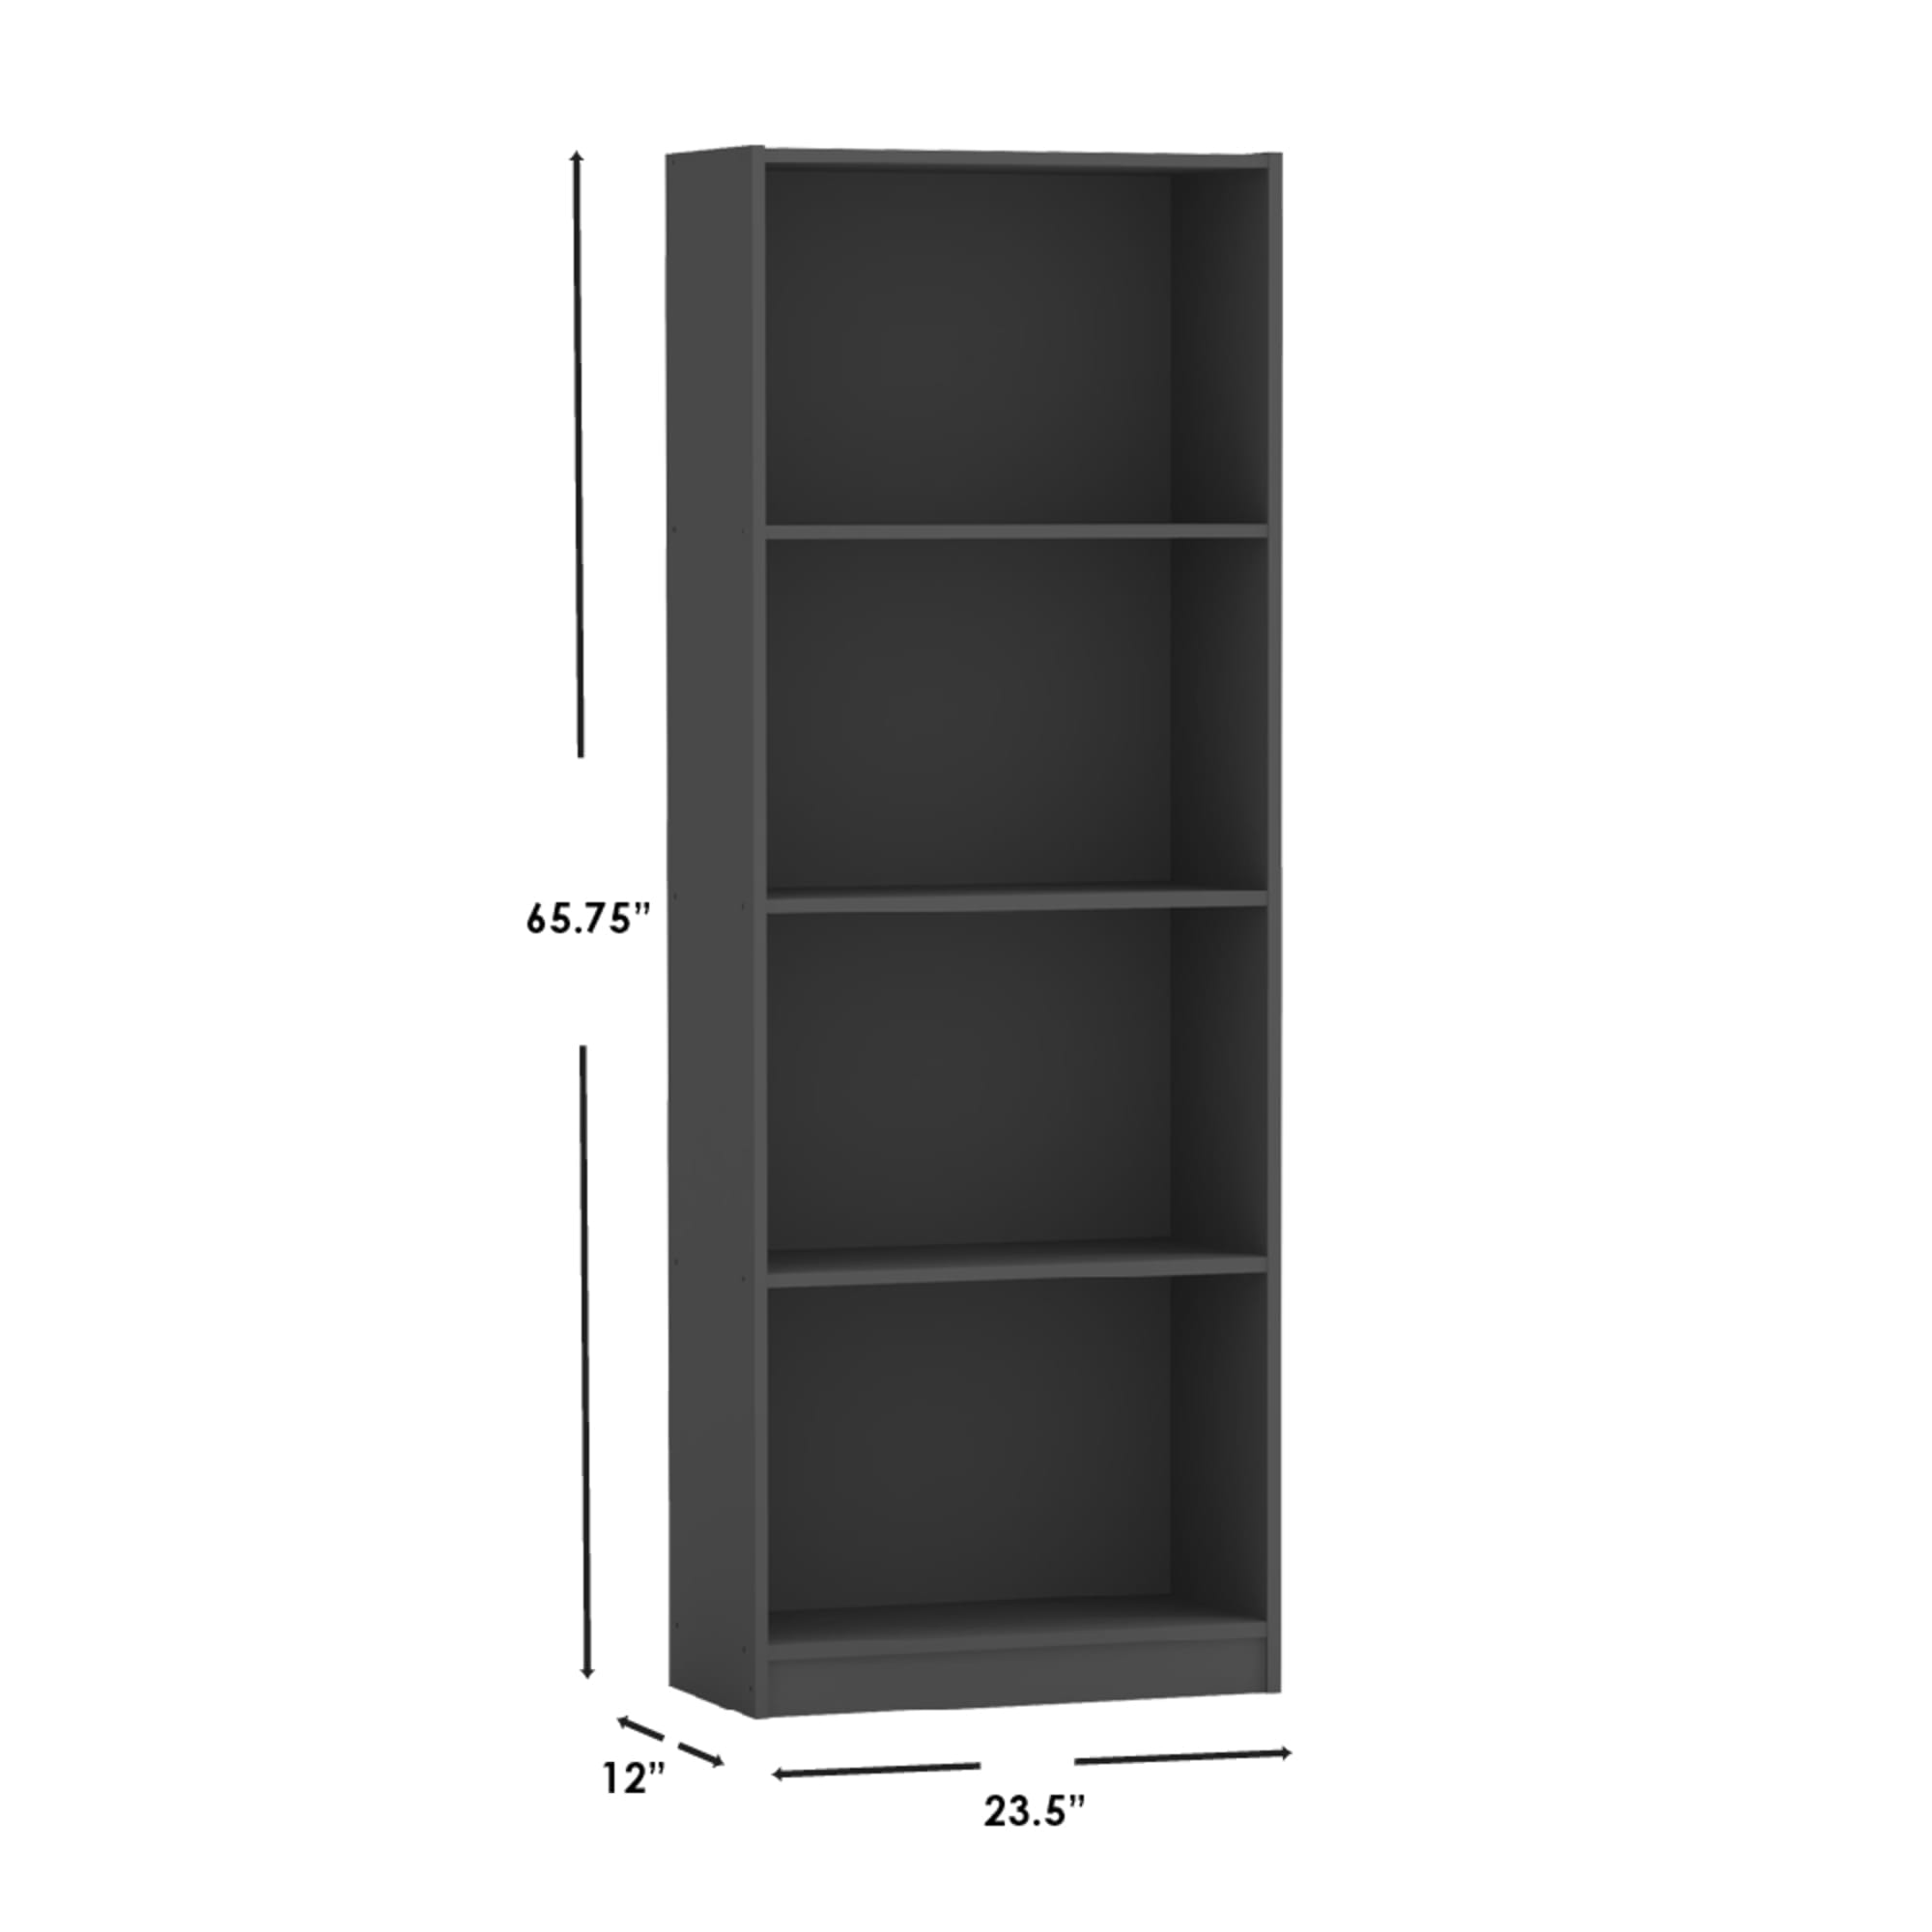 Home Basics 4 Shelf Bookcase, Grey $60.00 EACH, CASE PACK OF 1